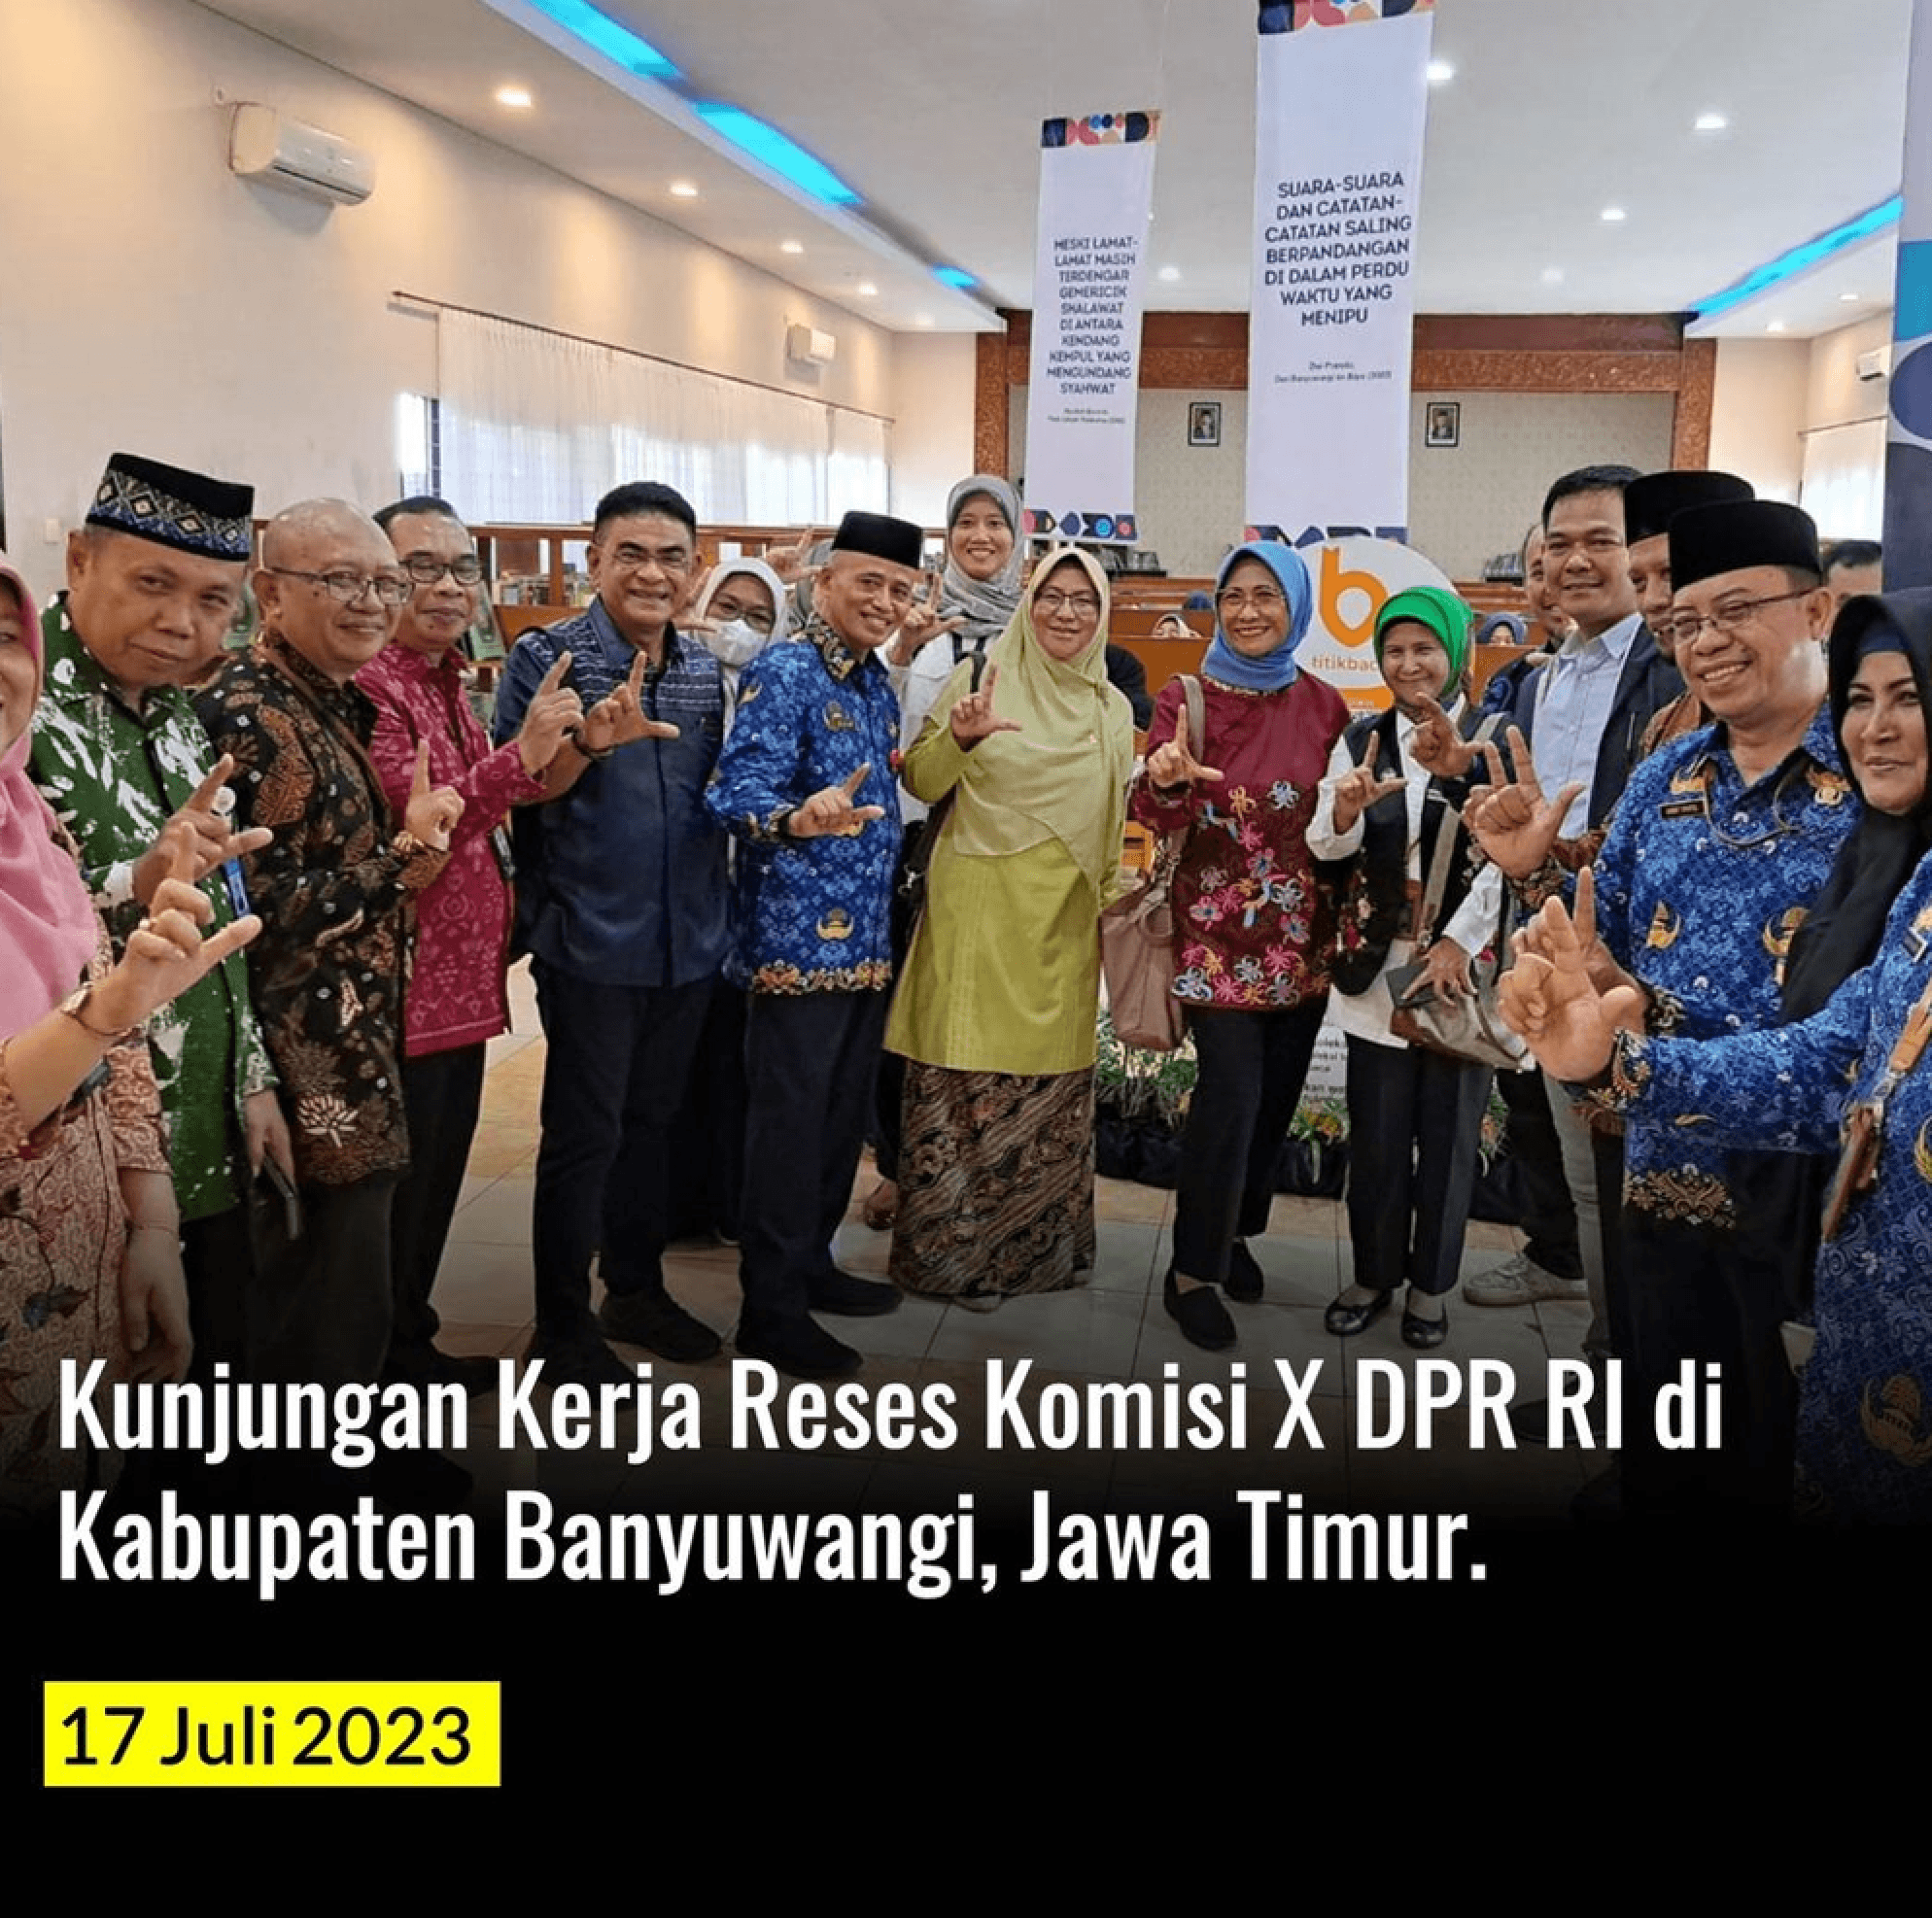 Kunjungan Kerja Reses Komisi X DPR RI Bersama Perpusnas RI di Kabupaten Banyuwangi, Jawa Timur